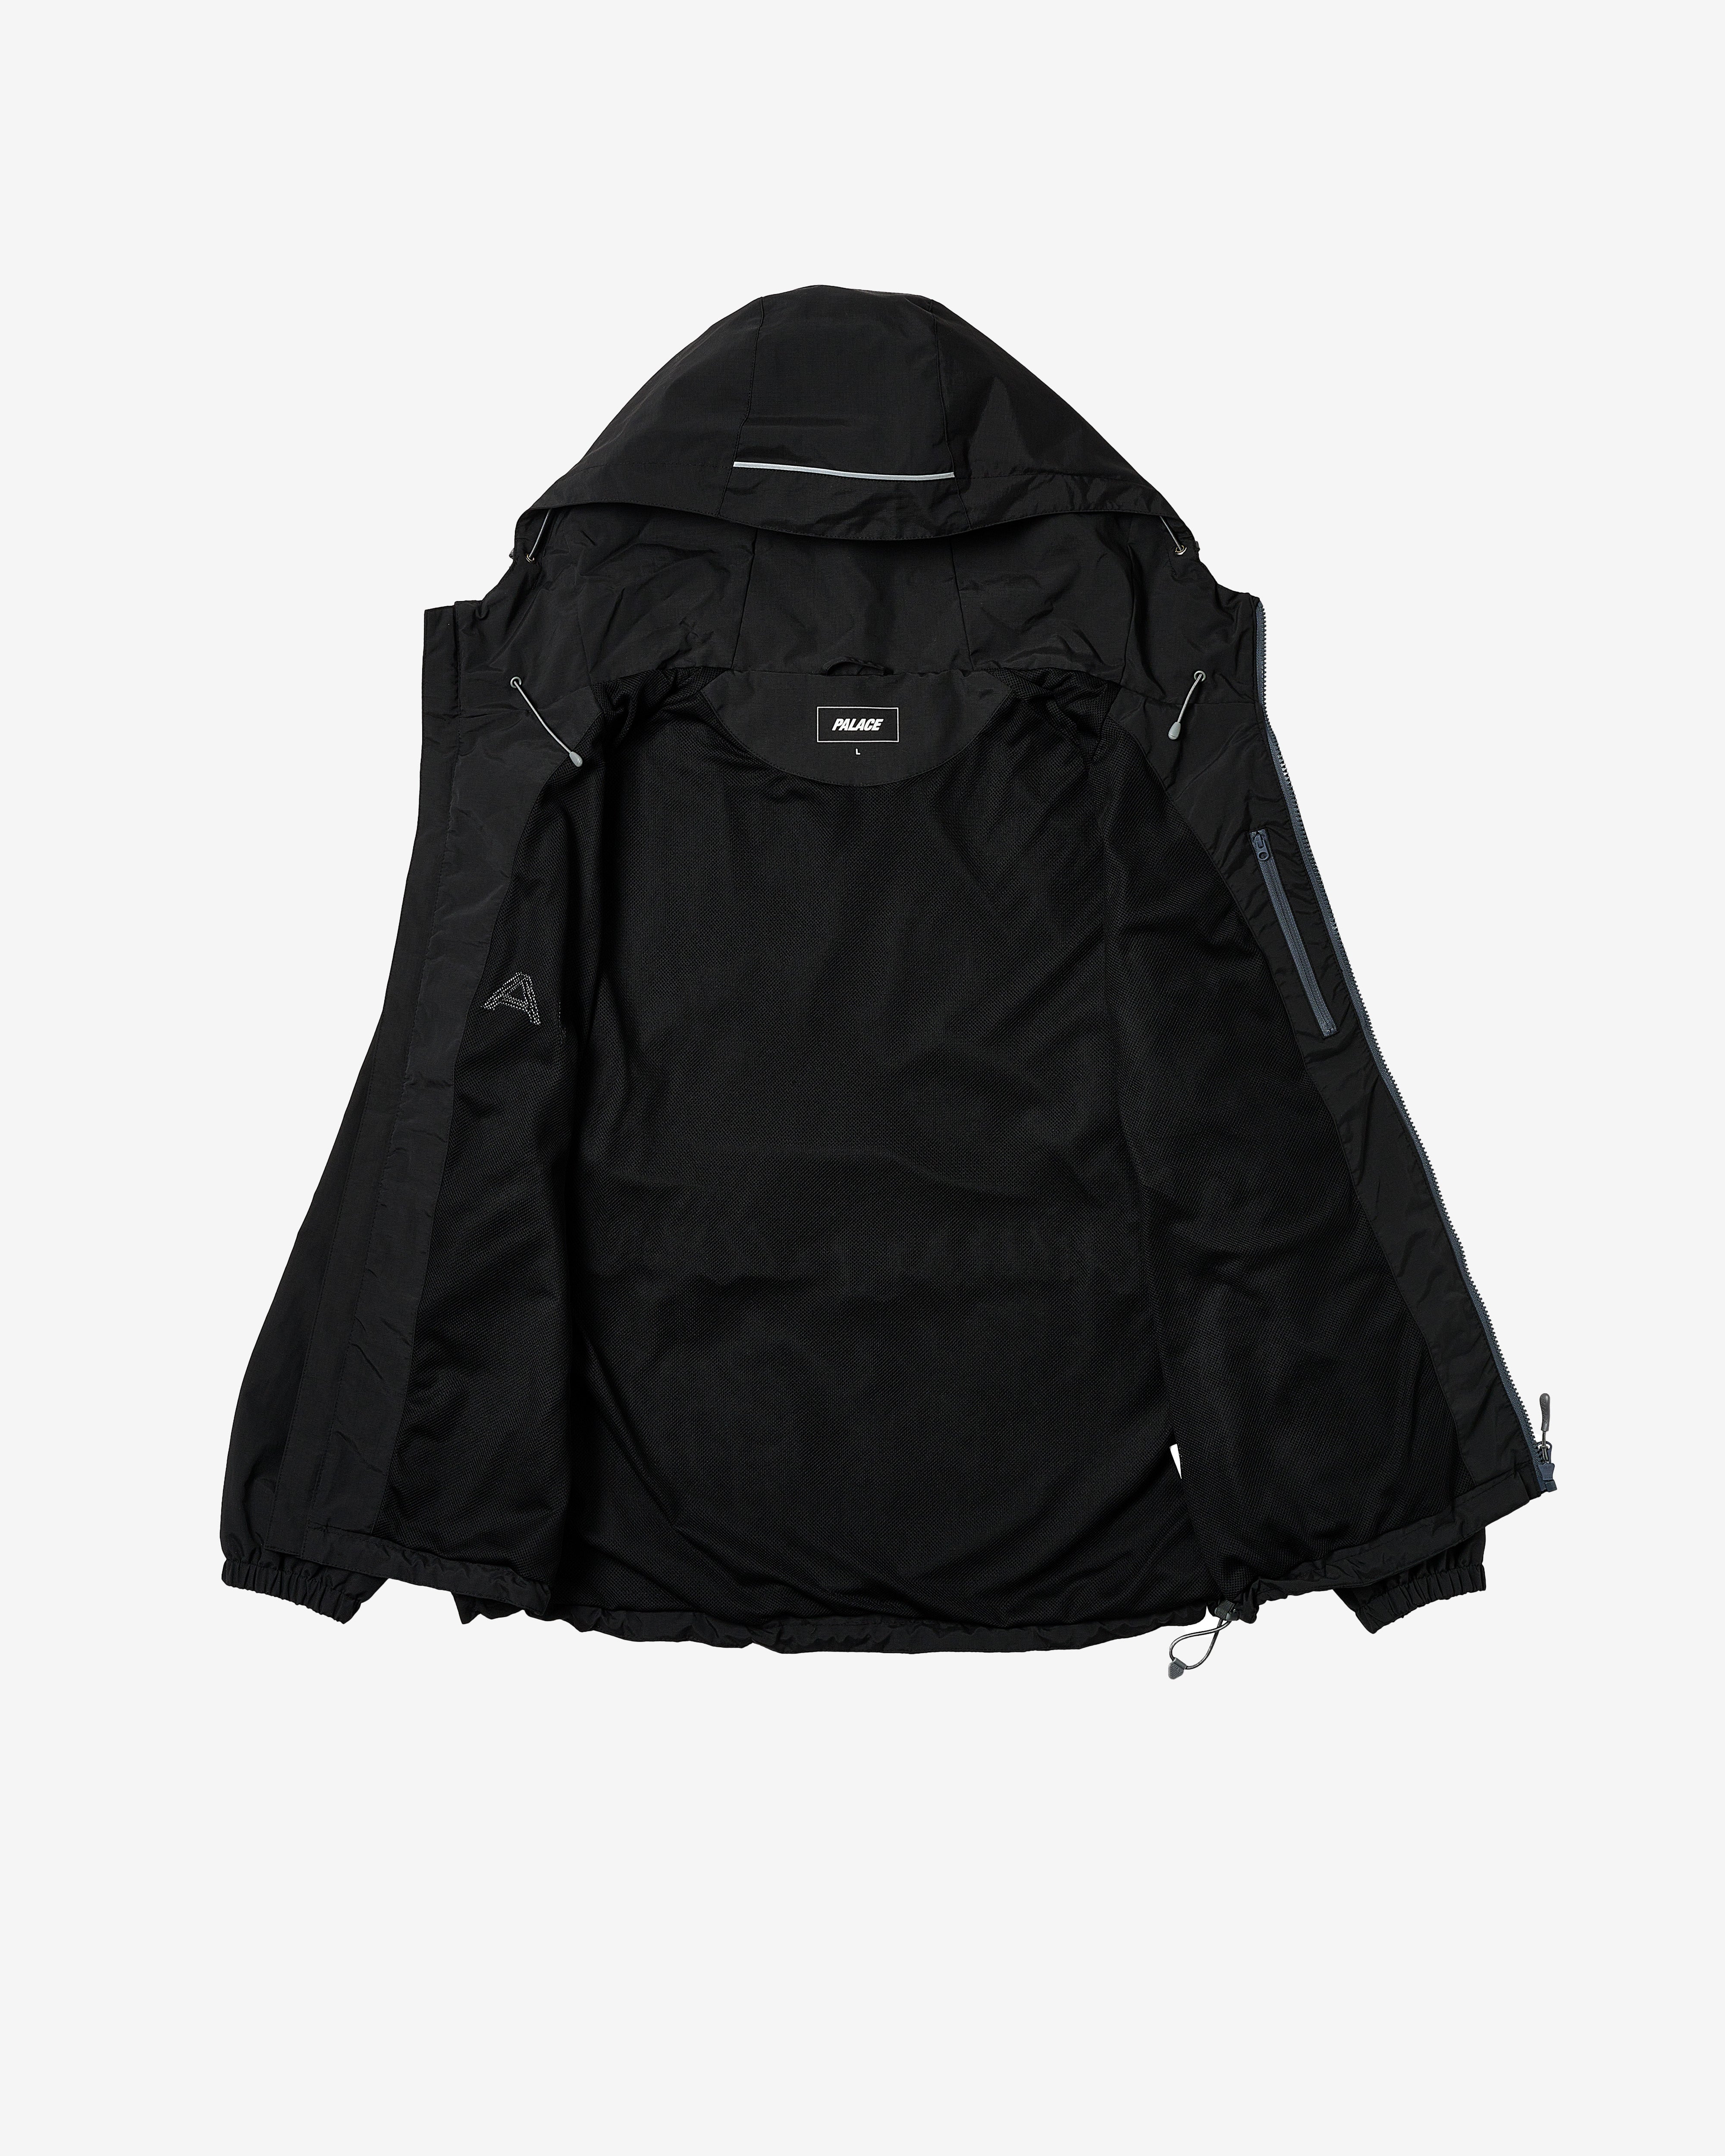 Palace - Men's Arc Shell Hooded Jacket - (Black)